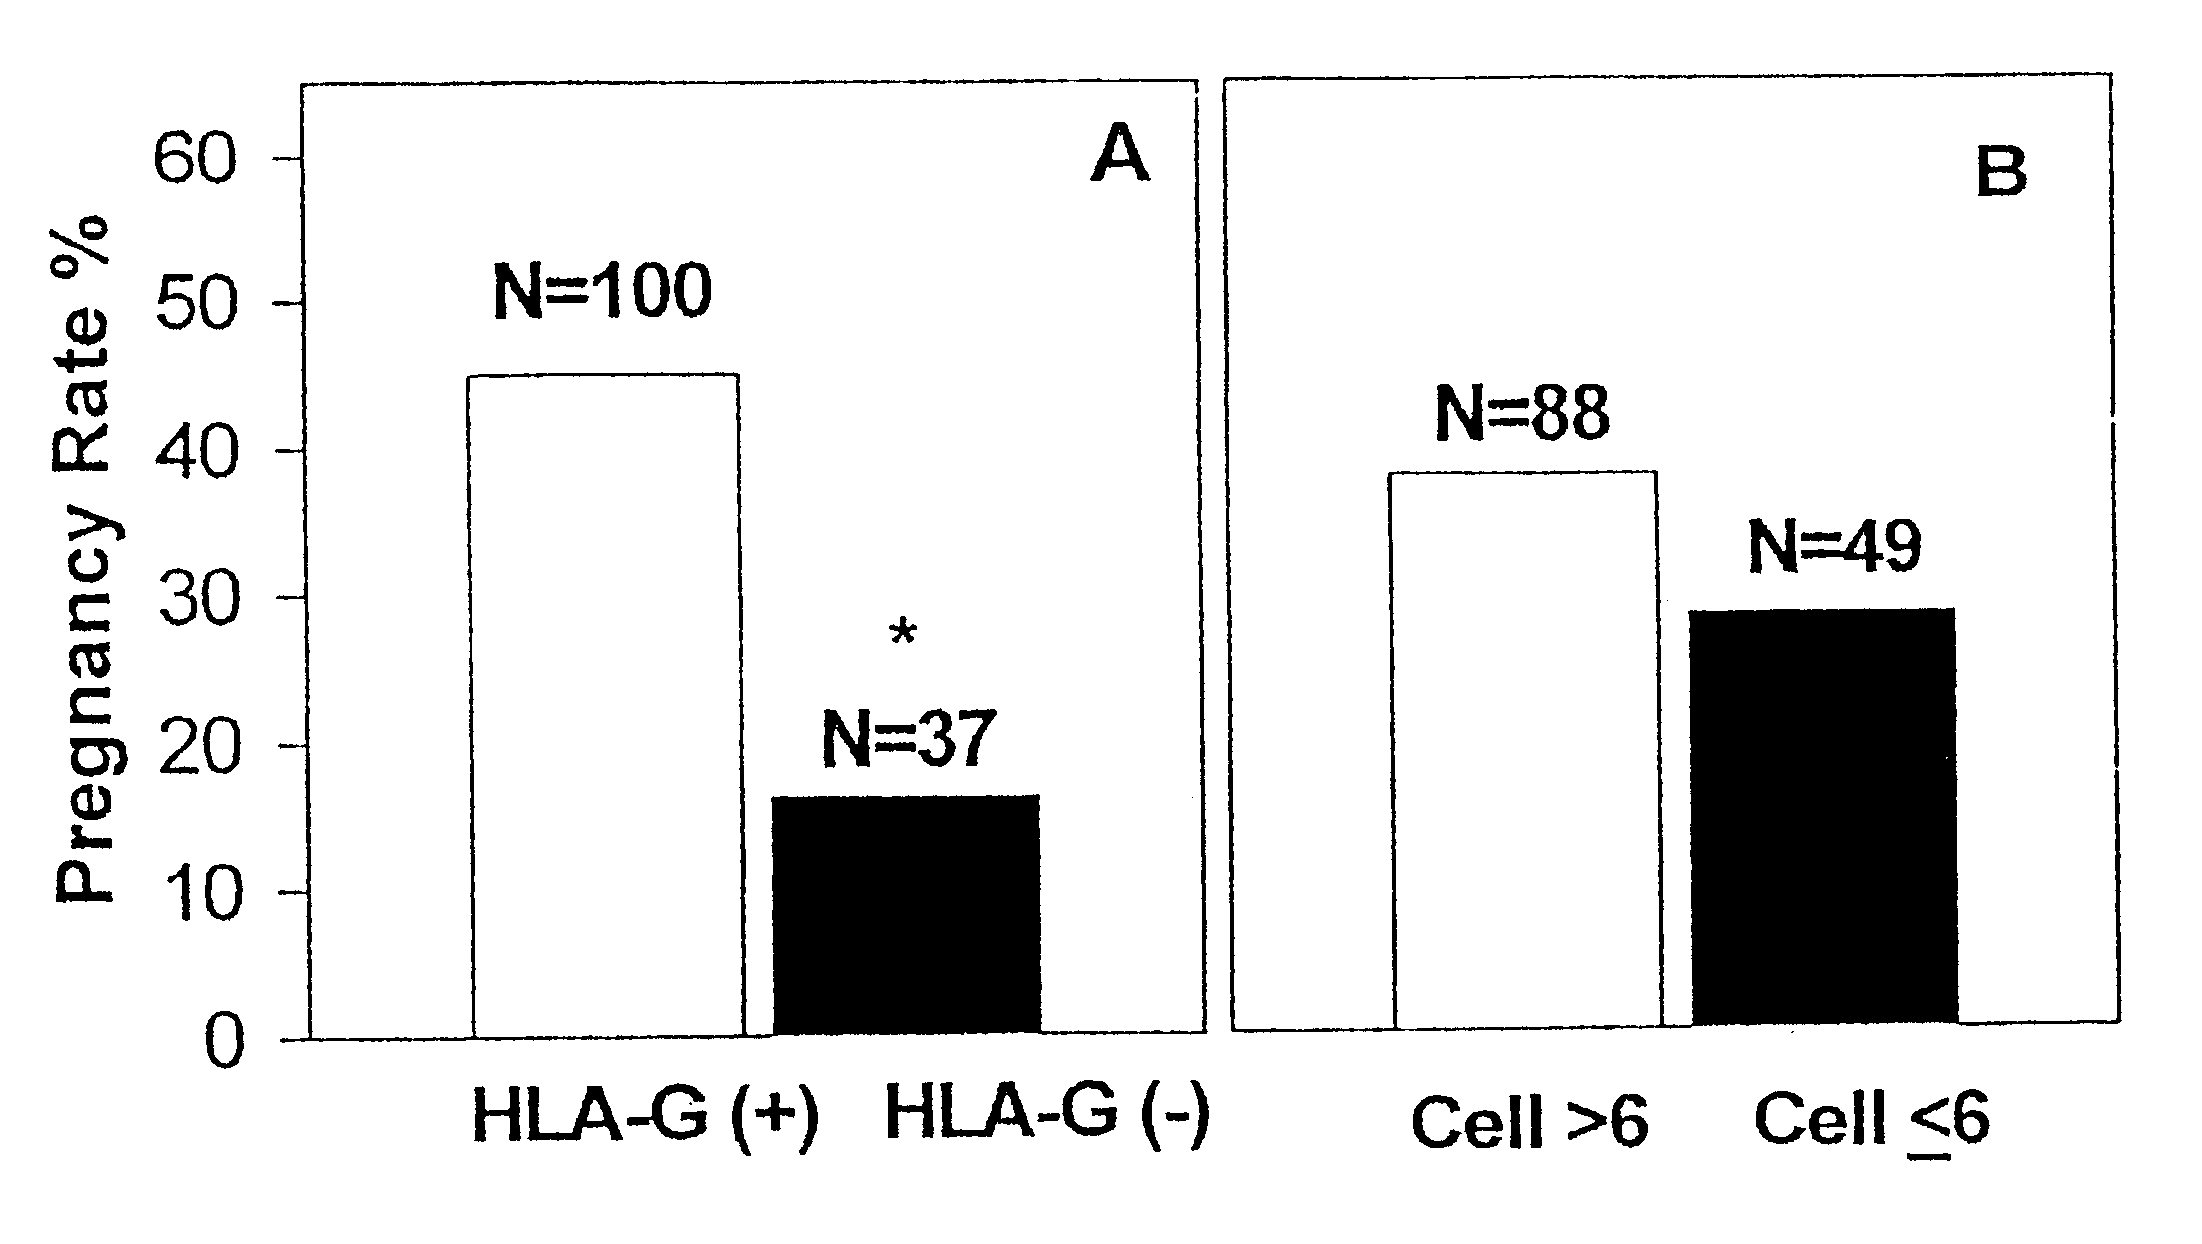 Detection of HLA-G